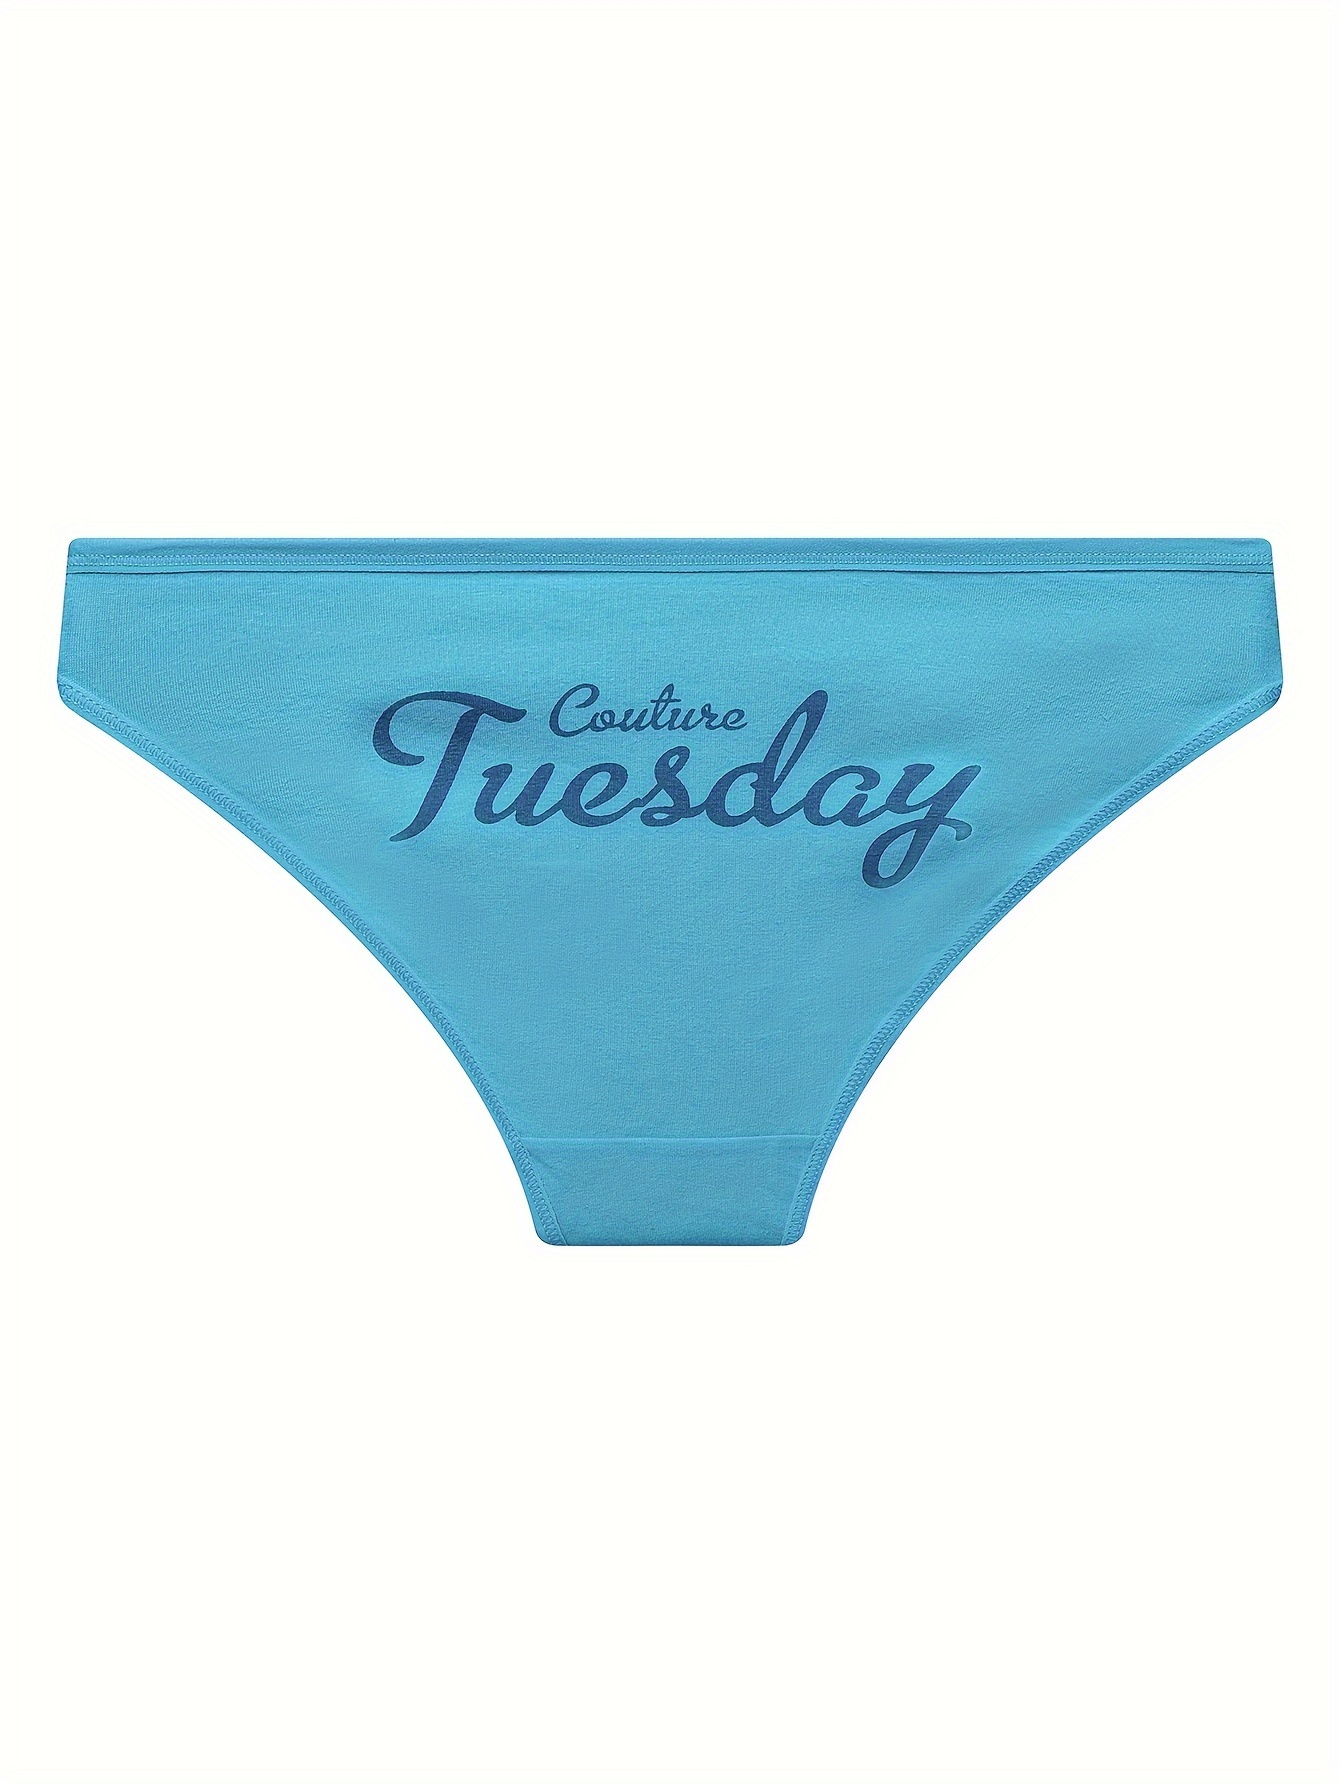 Every Day Cotton Underwear Women 7 Days Of Week Thongs G